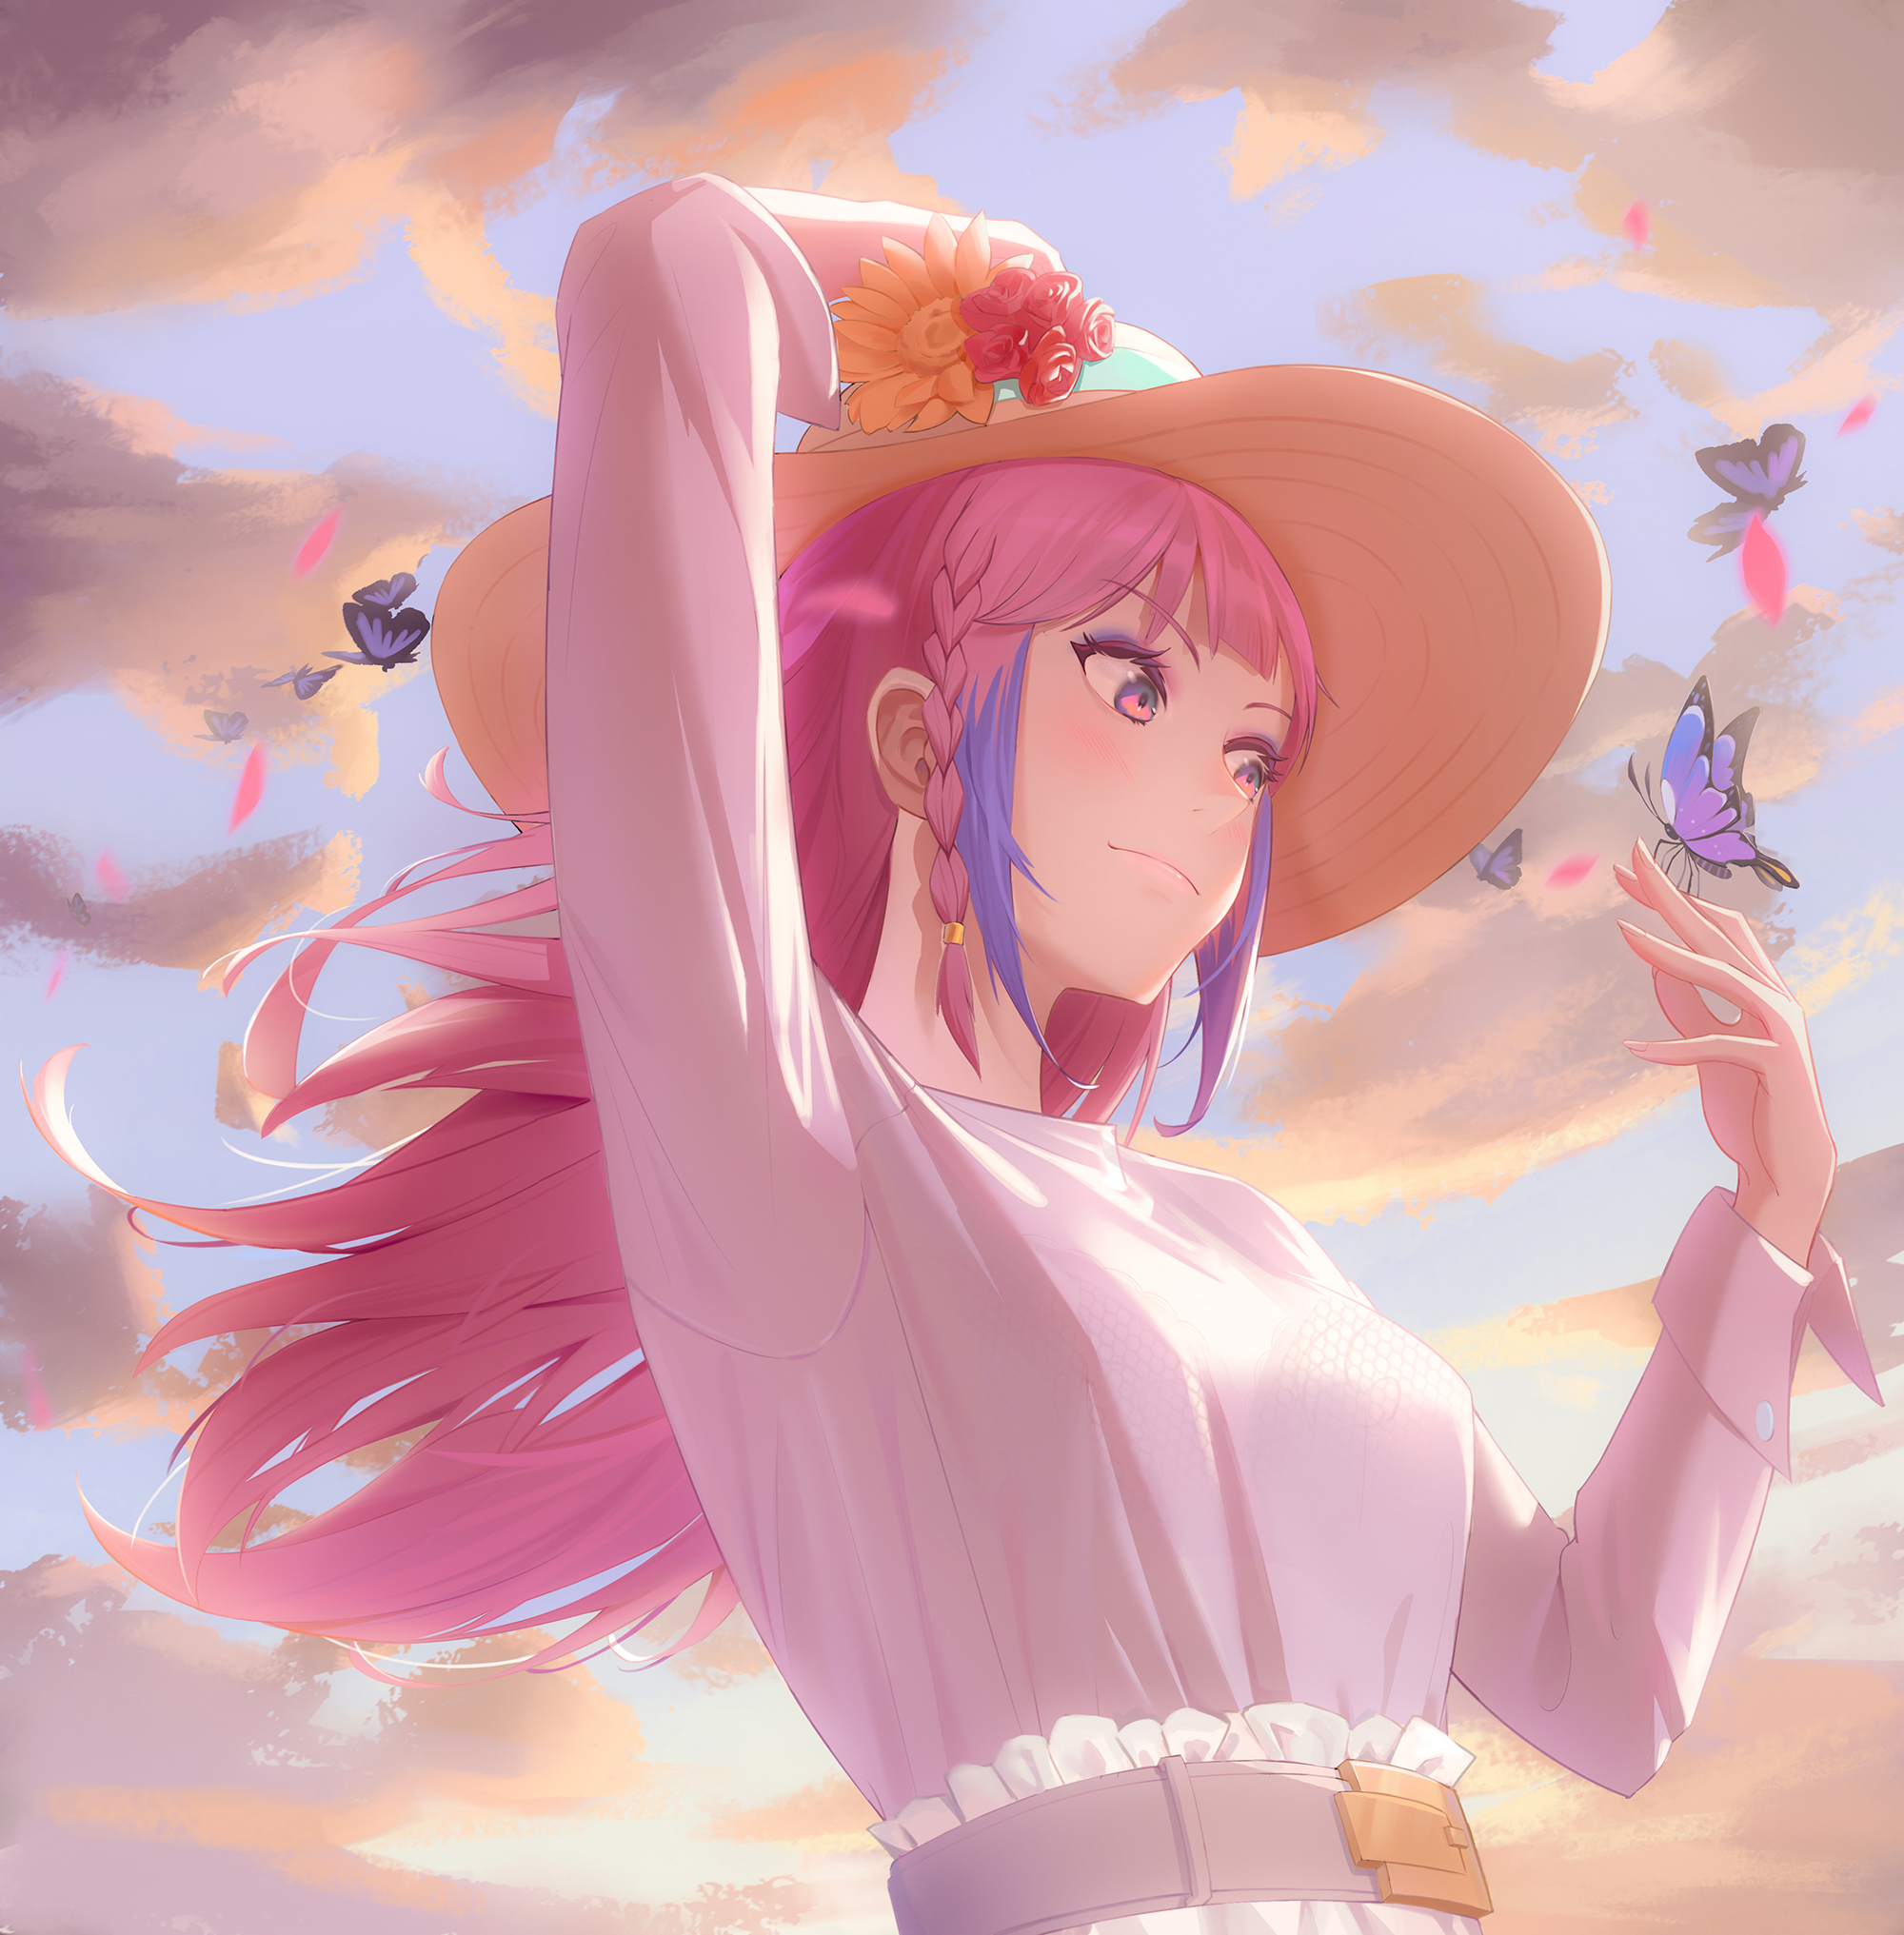 Anime 2000x2033 anime anime girls digital art artwork 2D portrait display hat pink hair pink eyes butterfly dress sky